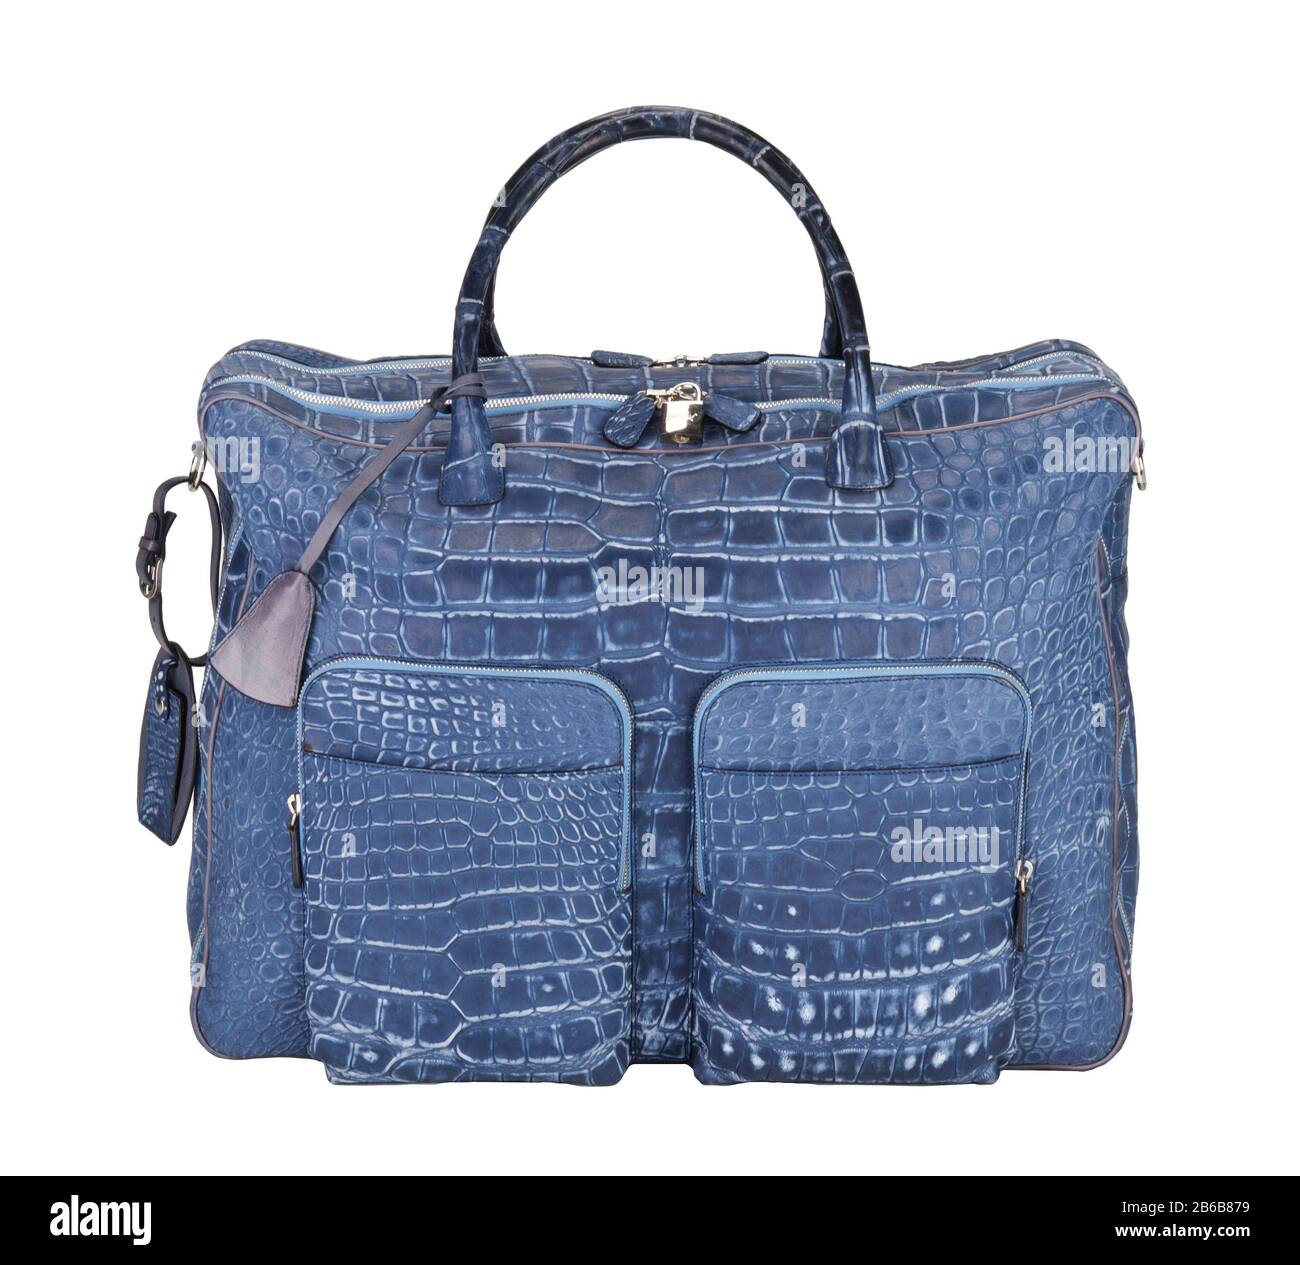 Leather Handbag Made From Crocodile Skin Emblem Crocodile Stock  Illustration - Download Image Now - iStock